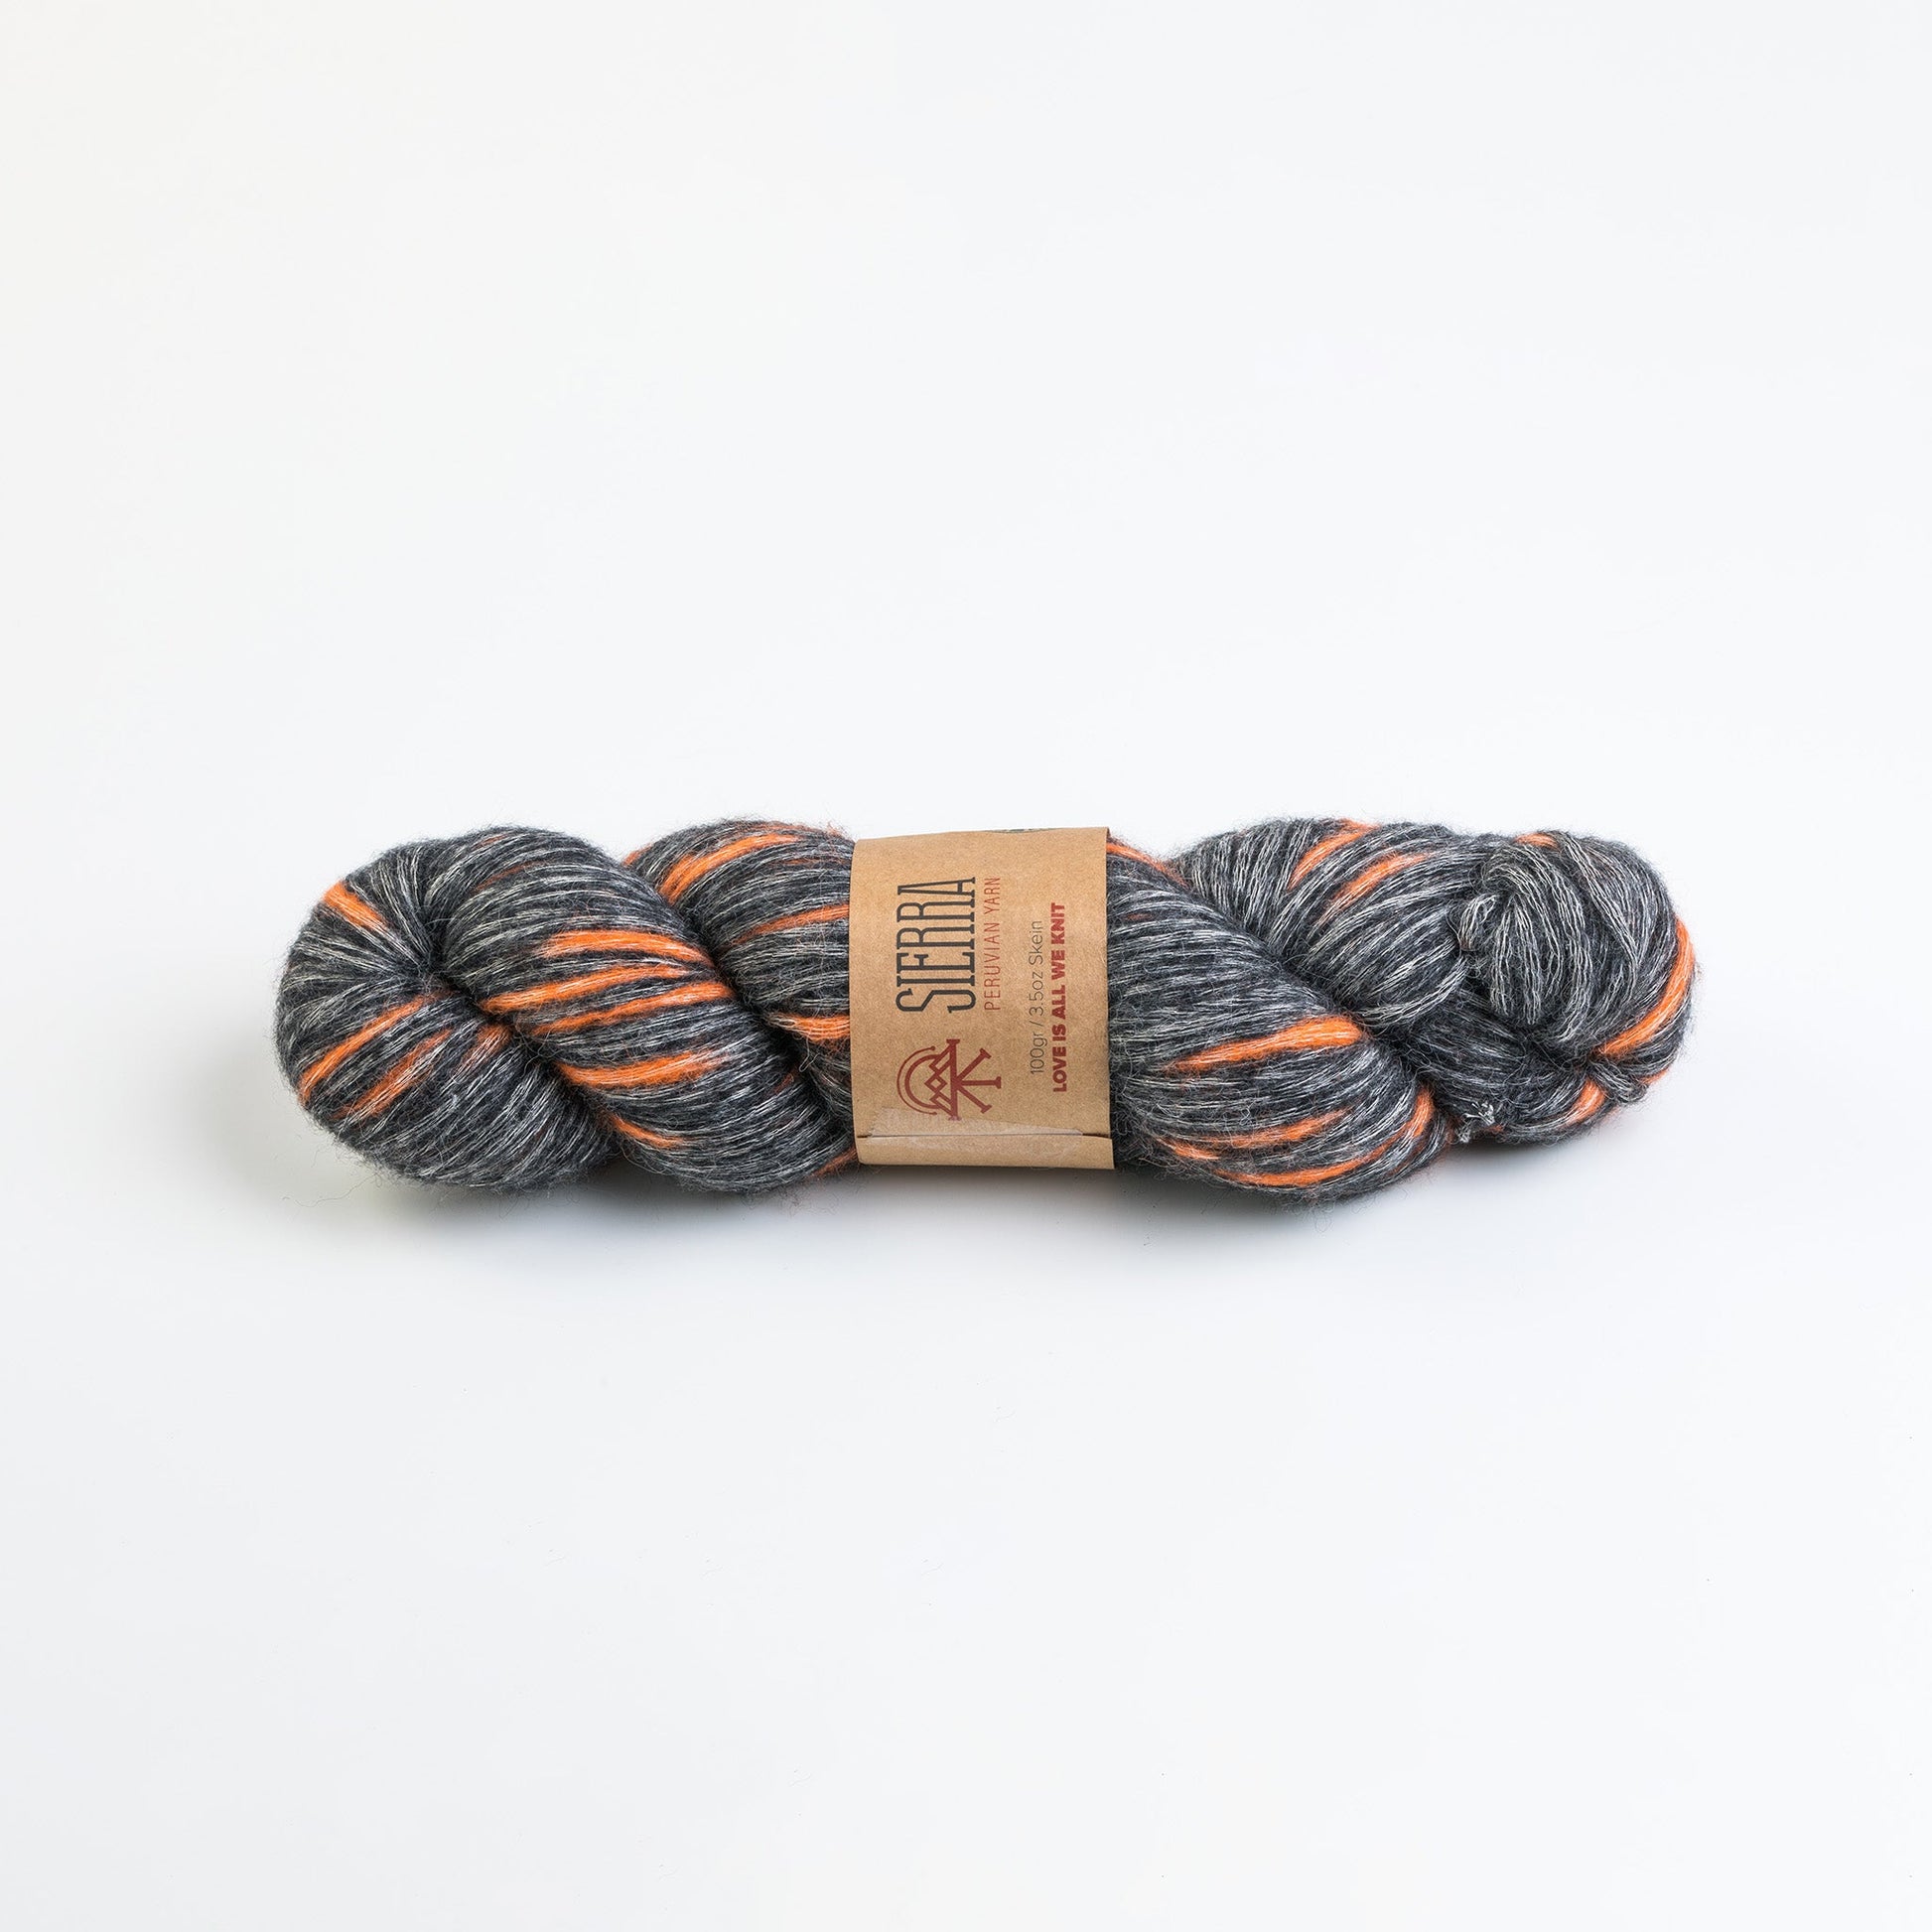 Orange and Charcoal Alpaca Cowl Knitting Kit